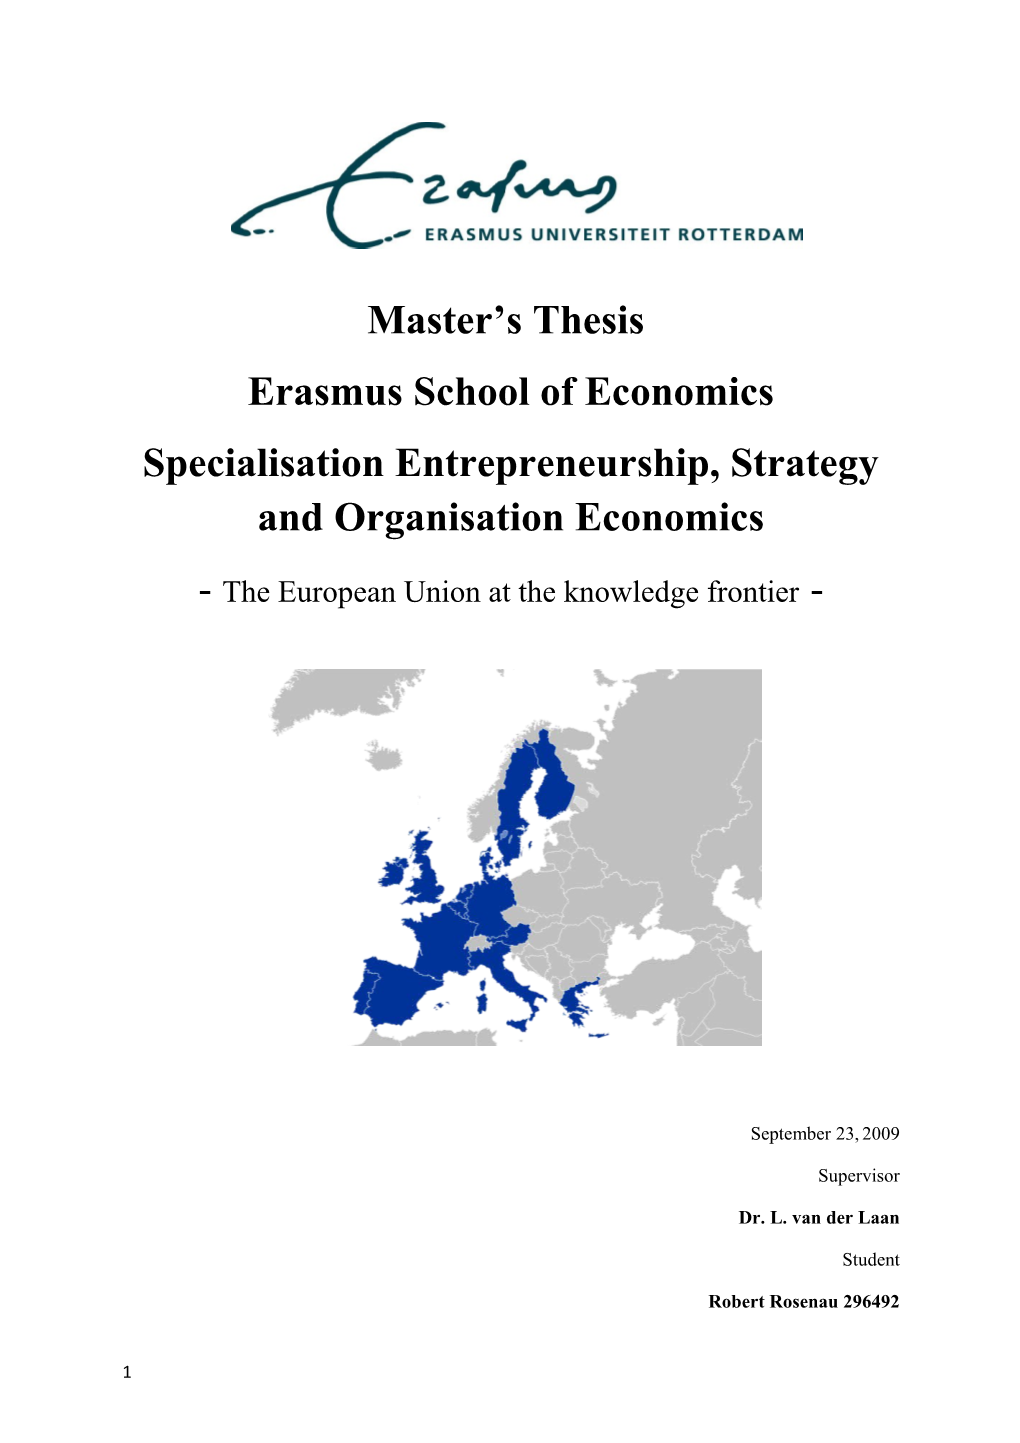 Specialisation Entrepreneurship, Strategy and Organisation Economics